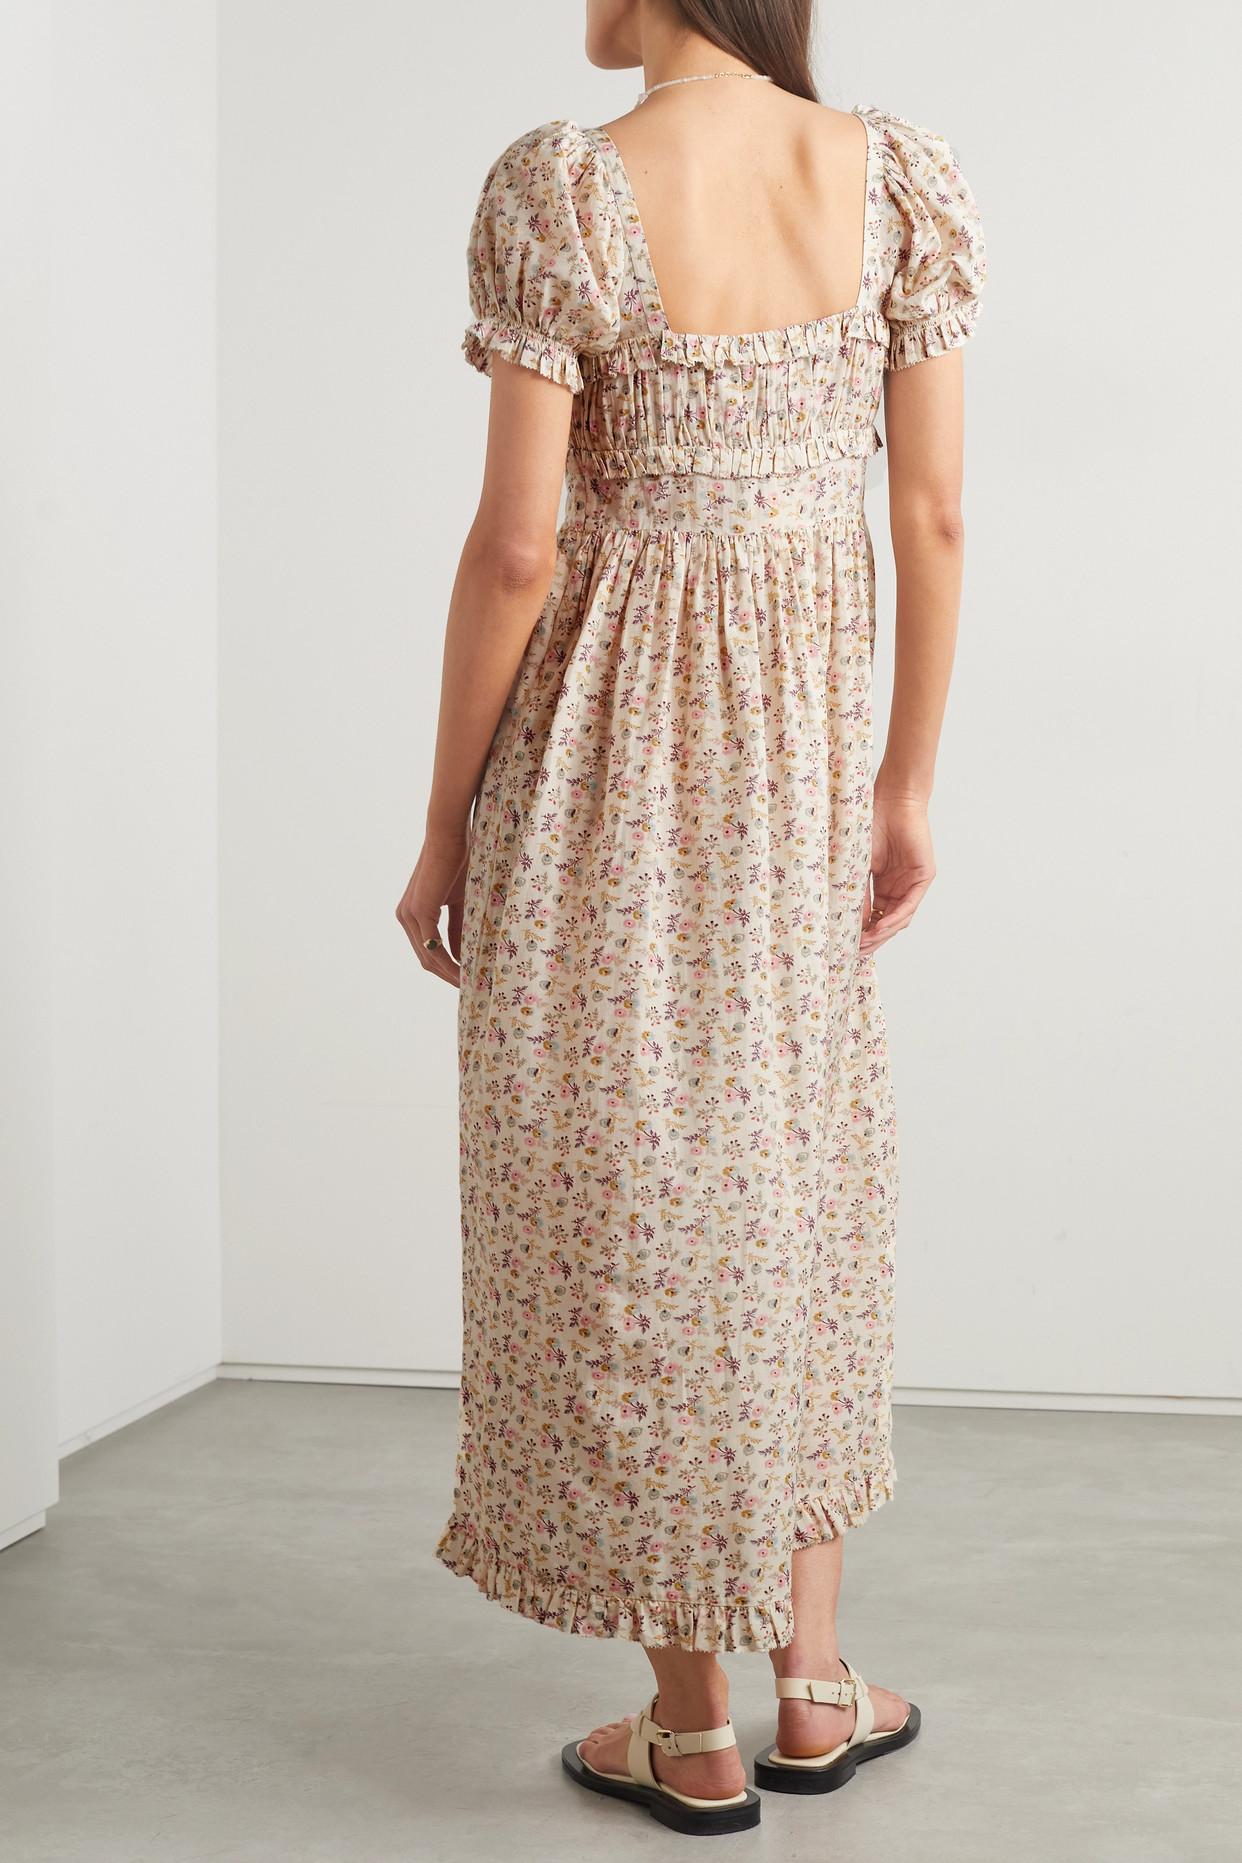 SELF-PORTRAIT Embellished corded lace midi dress | NET-A-PORTER